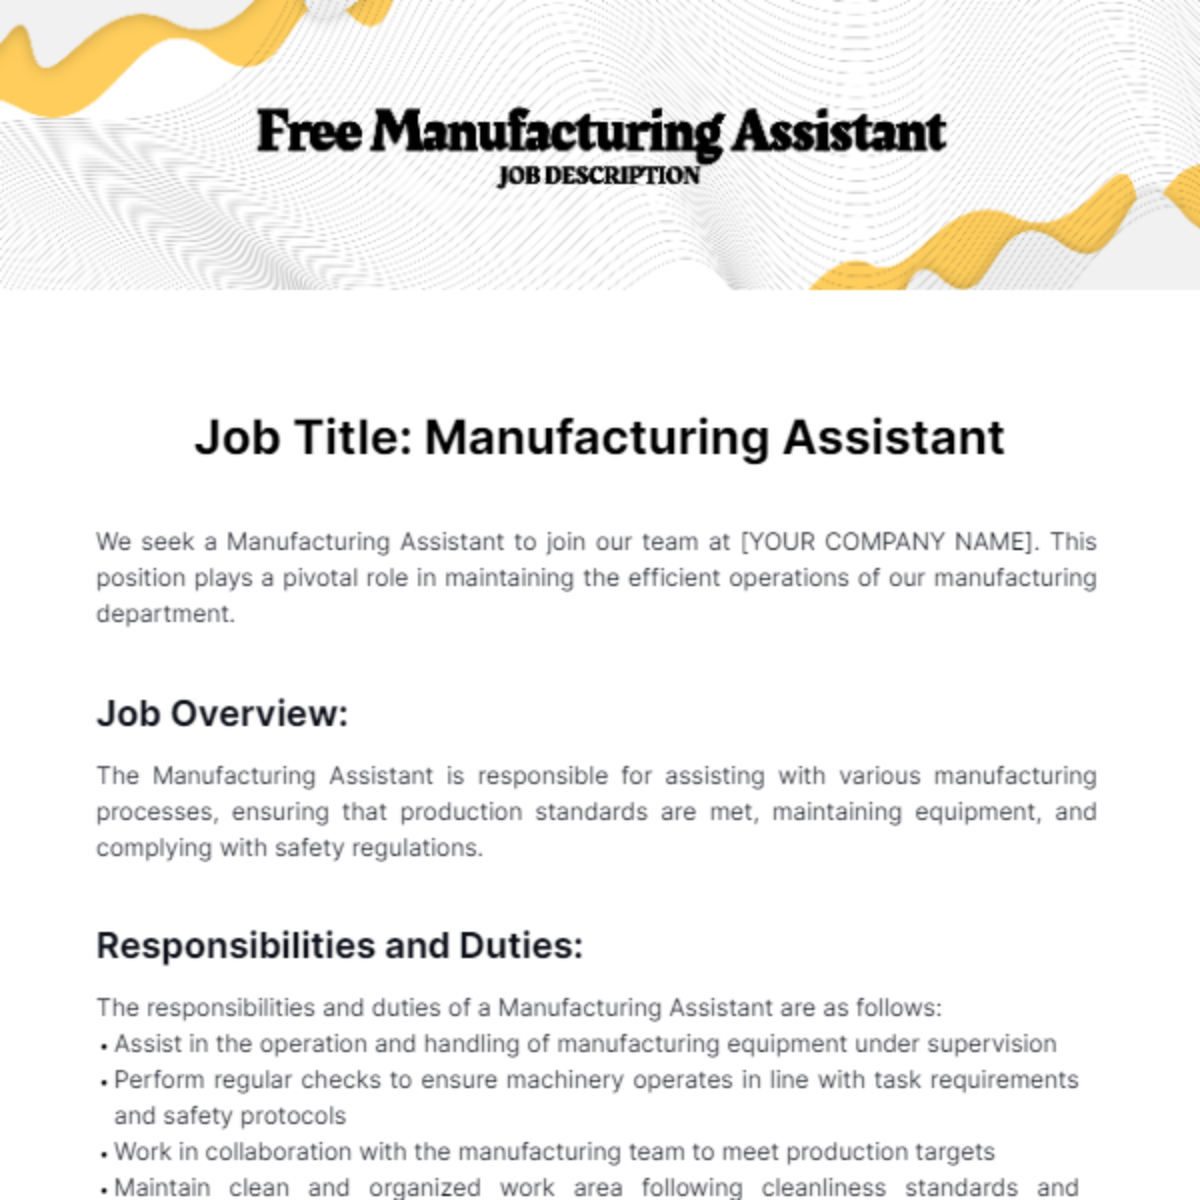 Free Manufacturing Assistant Job Description Template